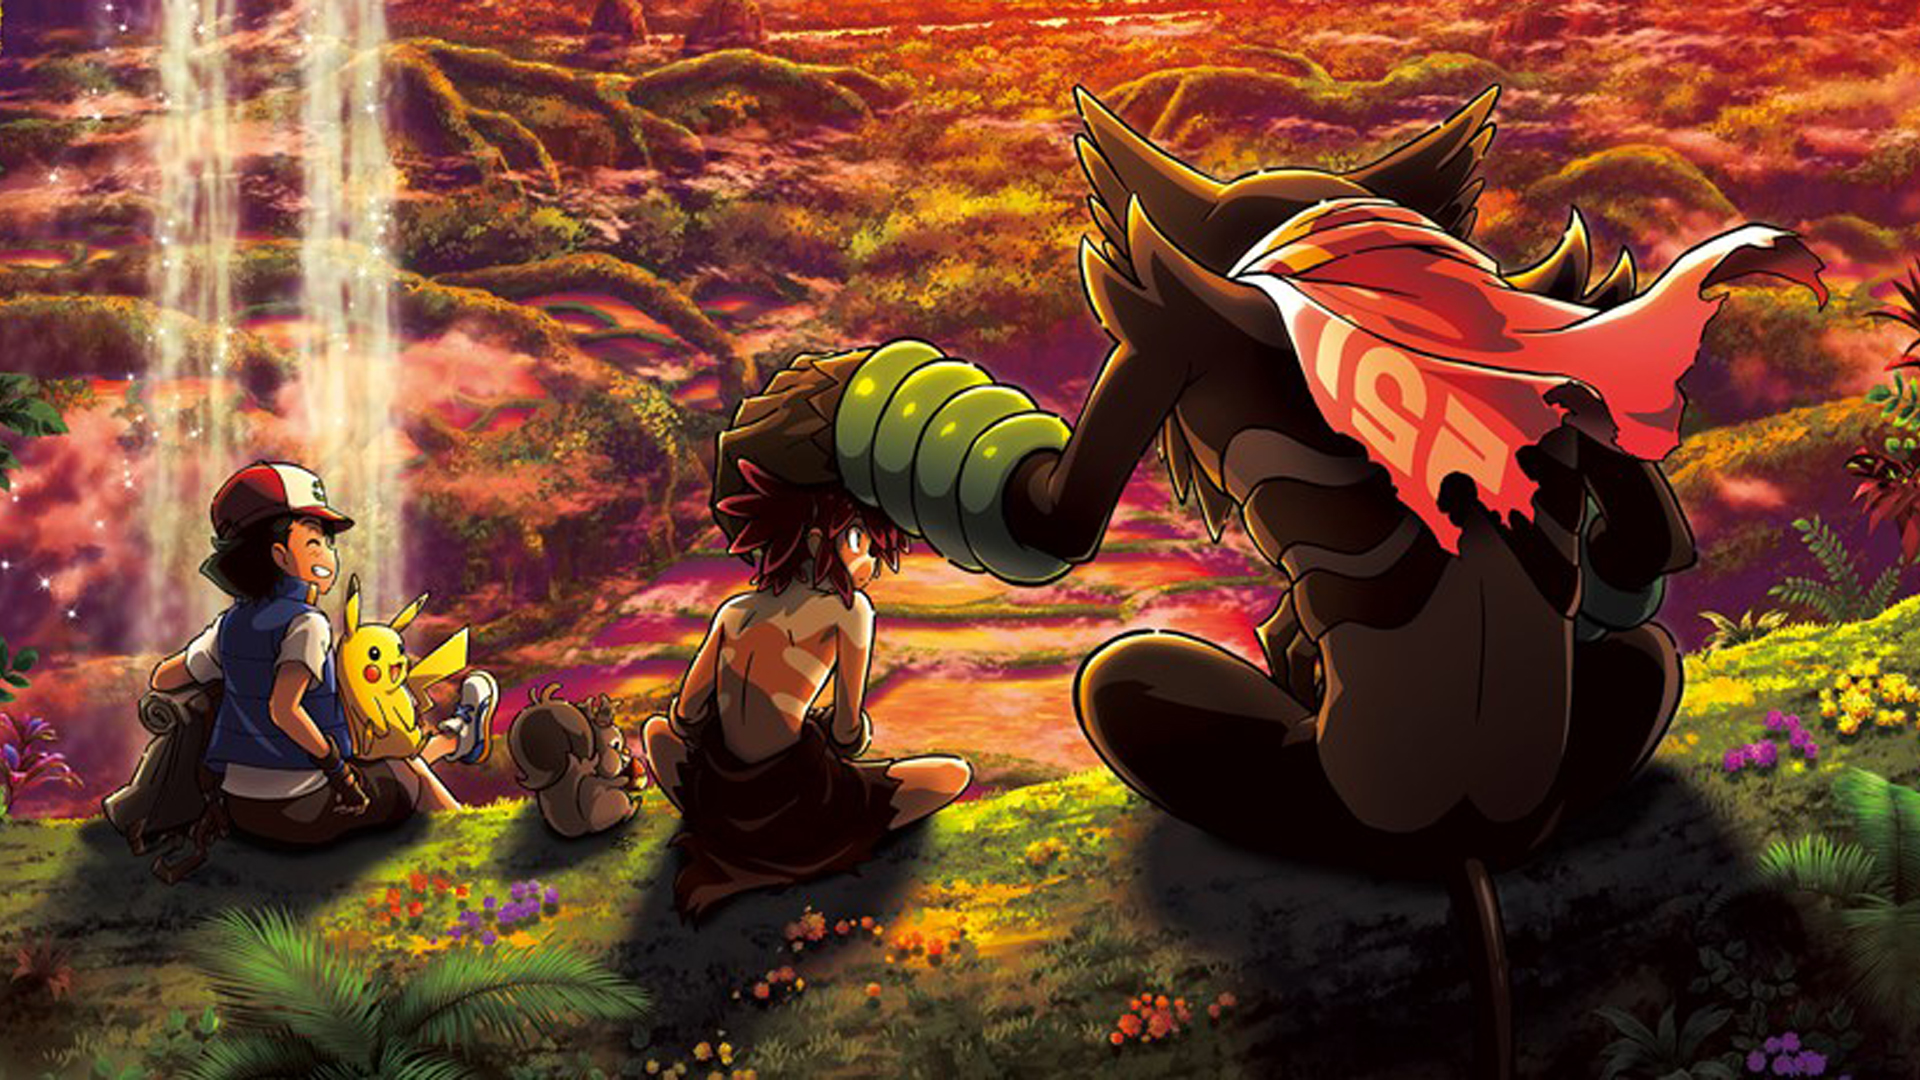 Pokemon Sword and Shield: How to get Dada Zarude and Shiny Celebi